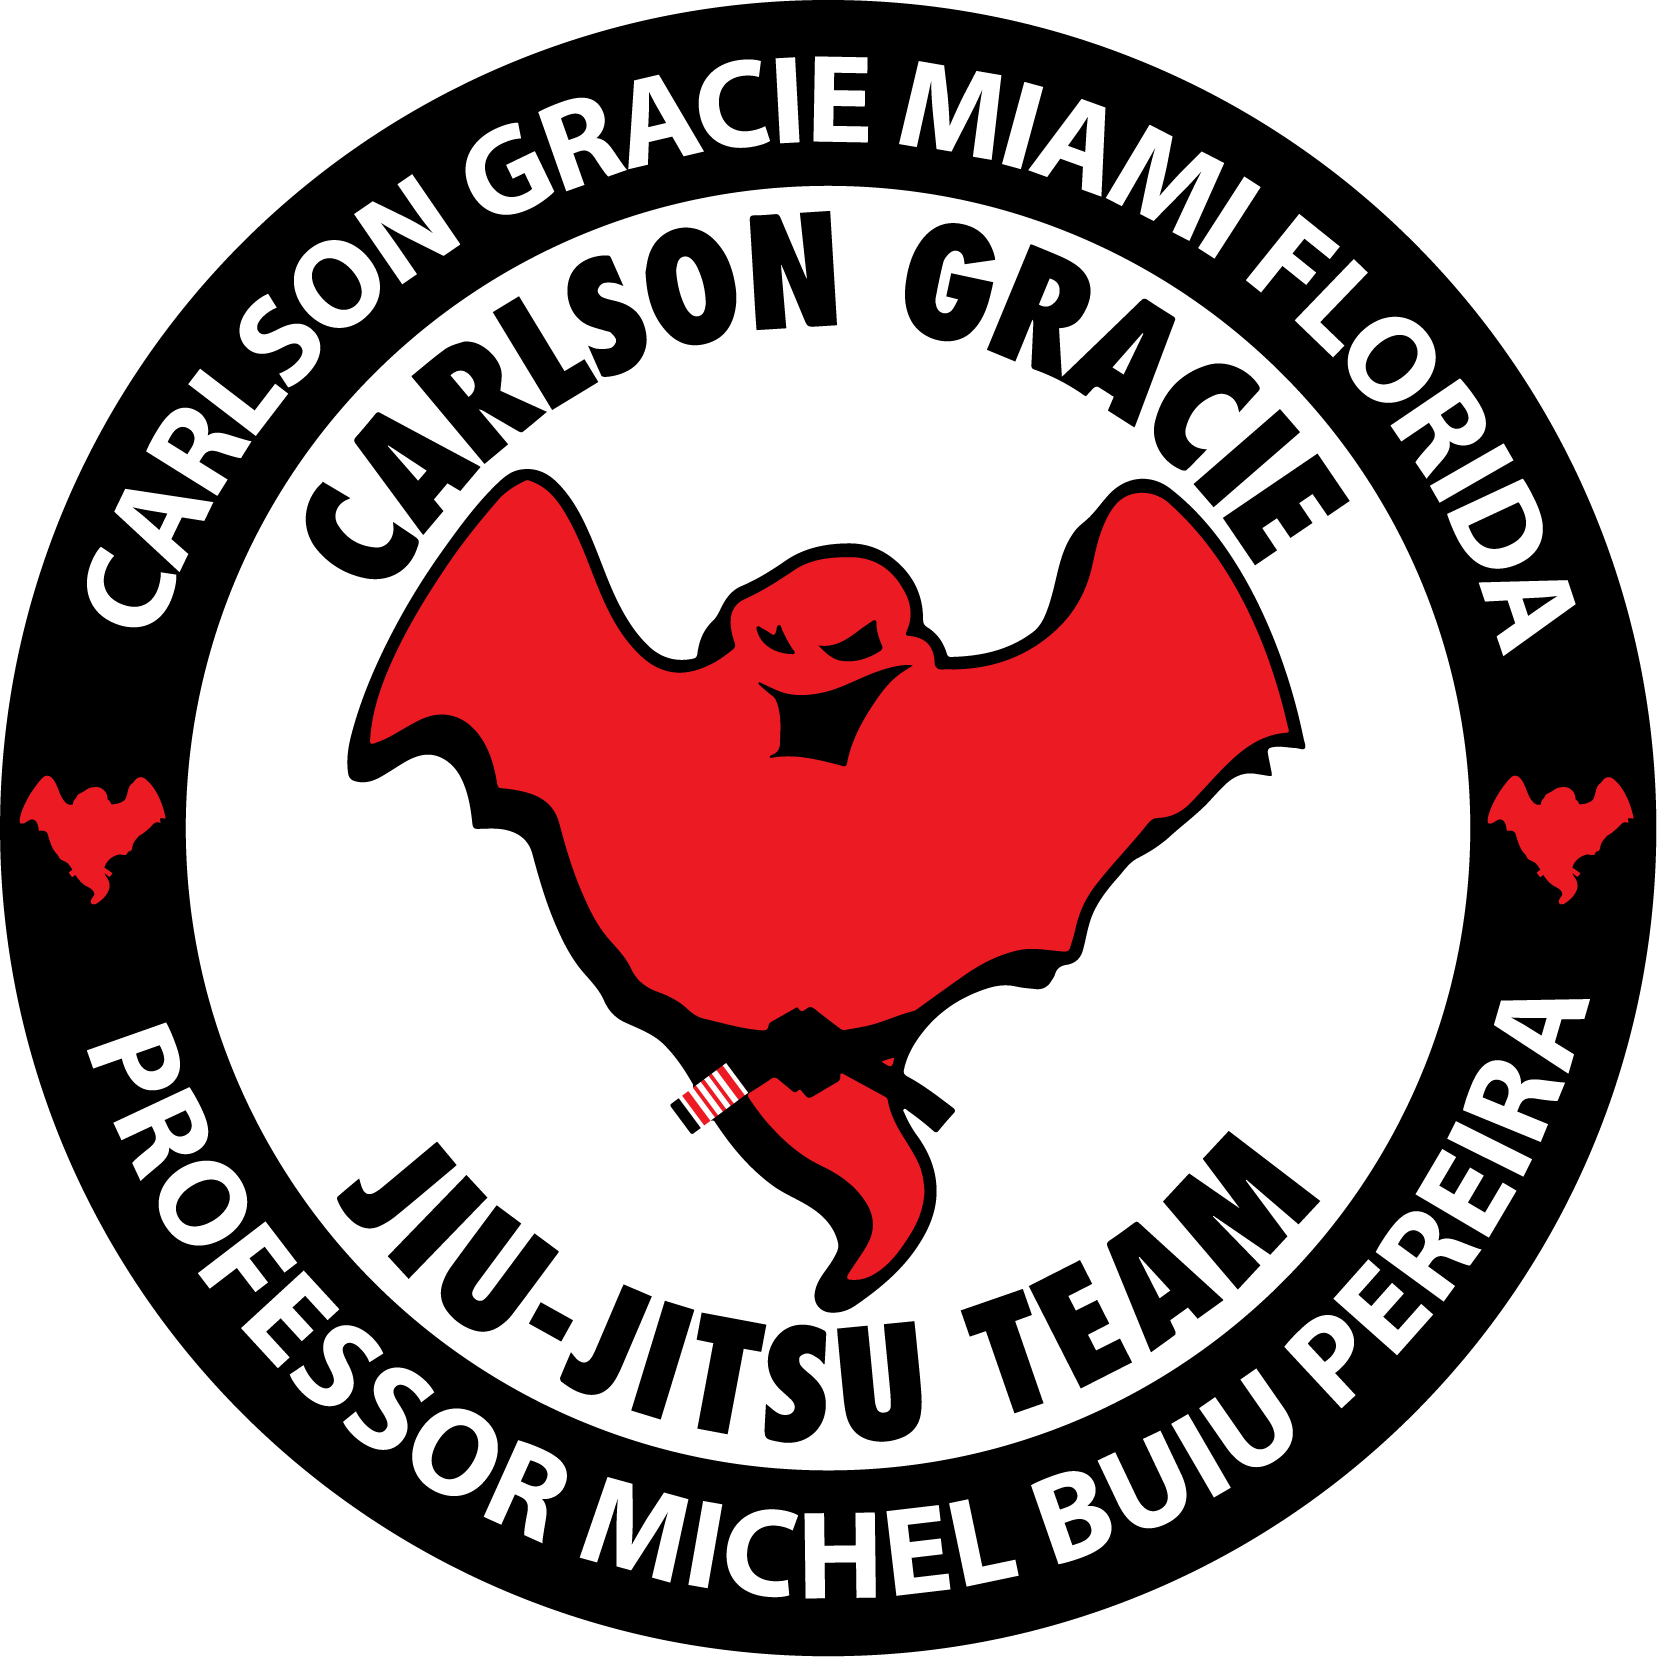 Carlson Gracie Miami logo